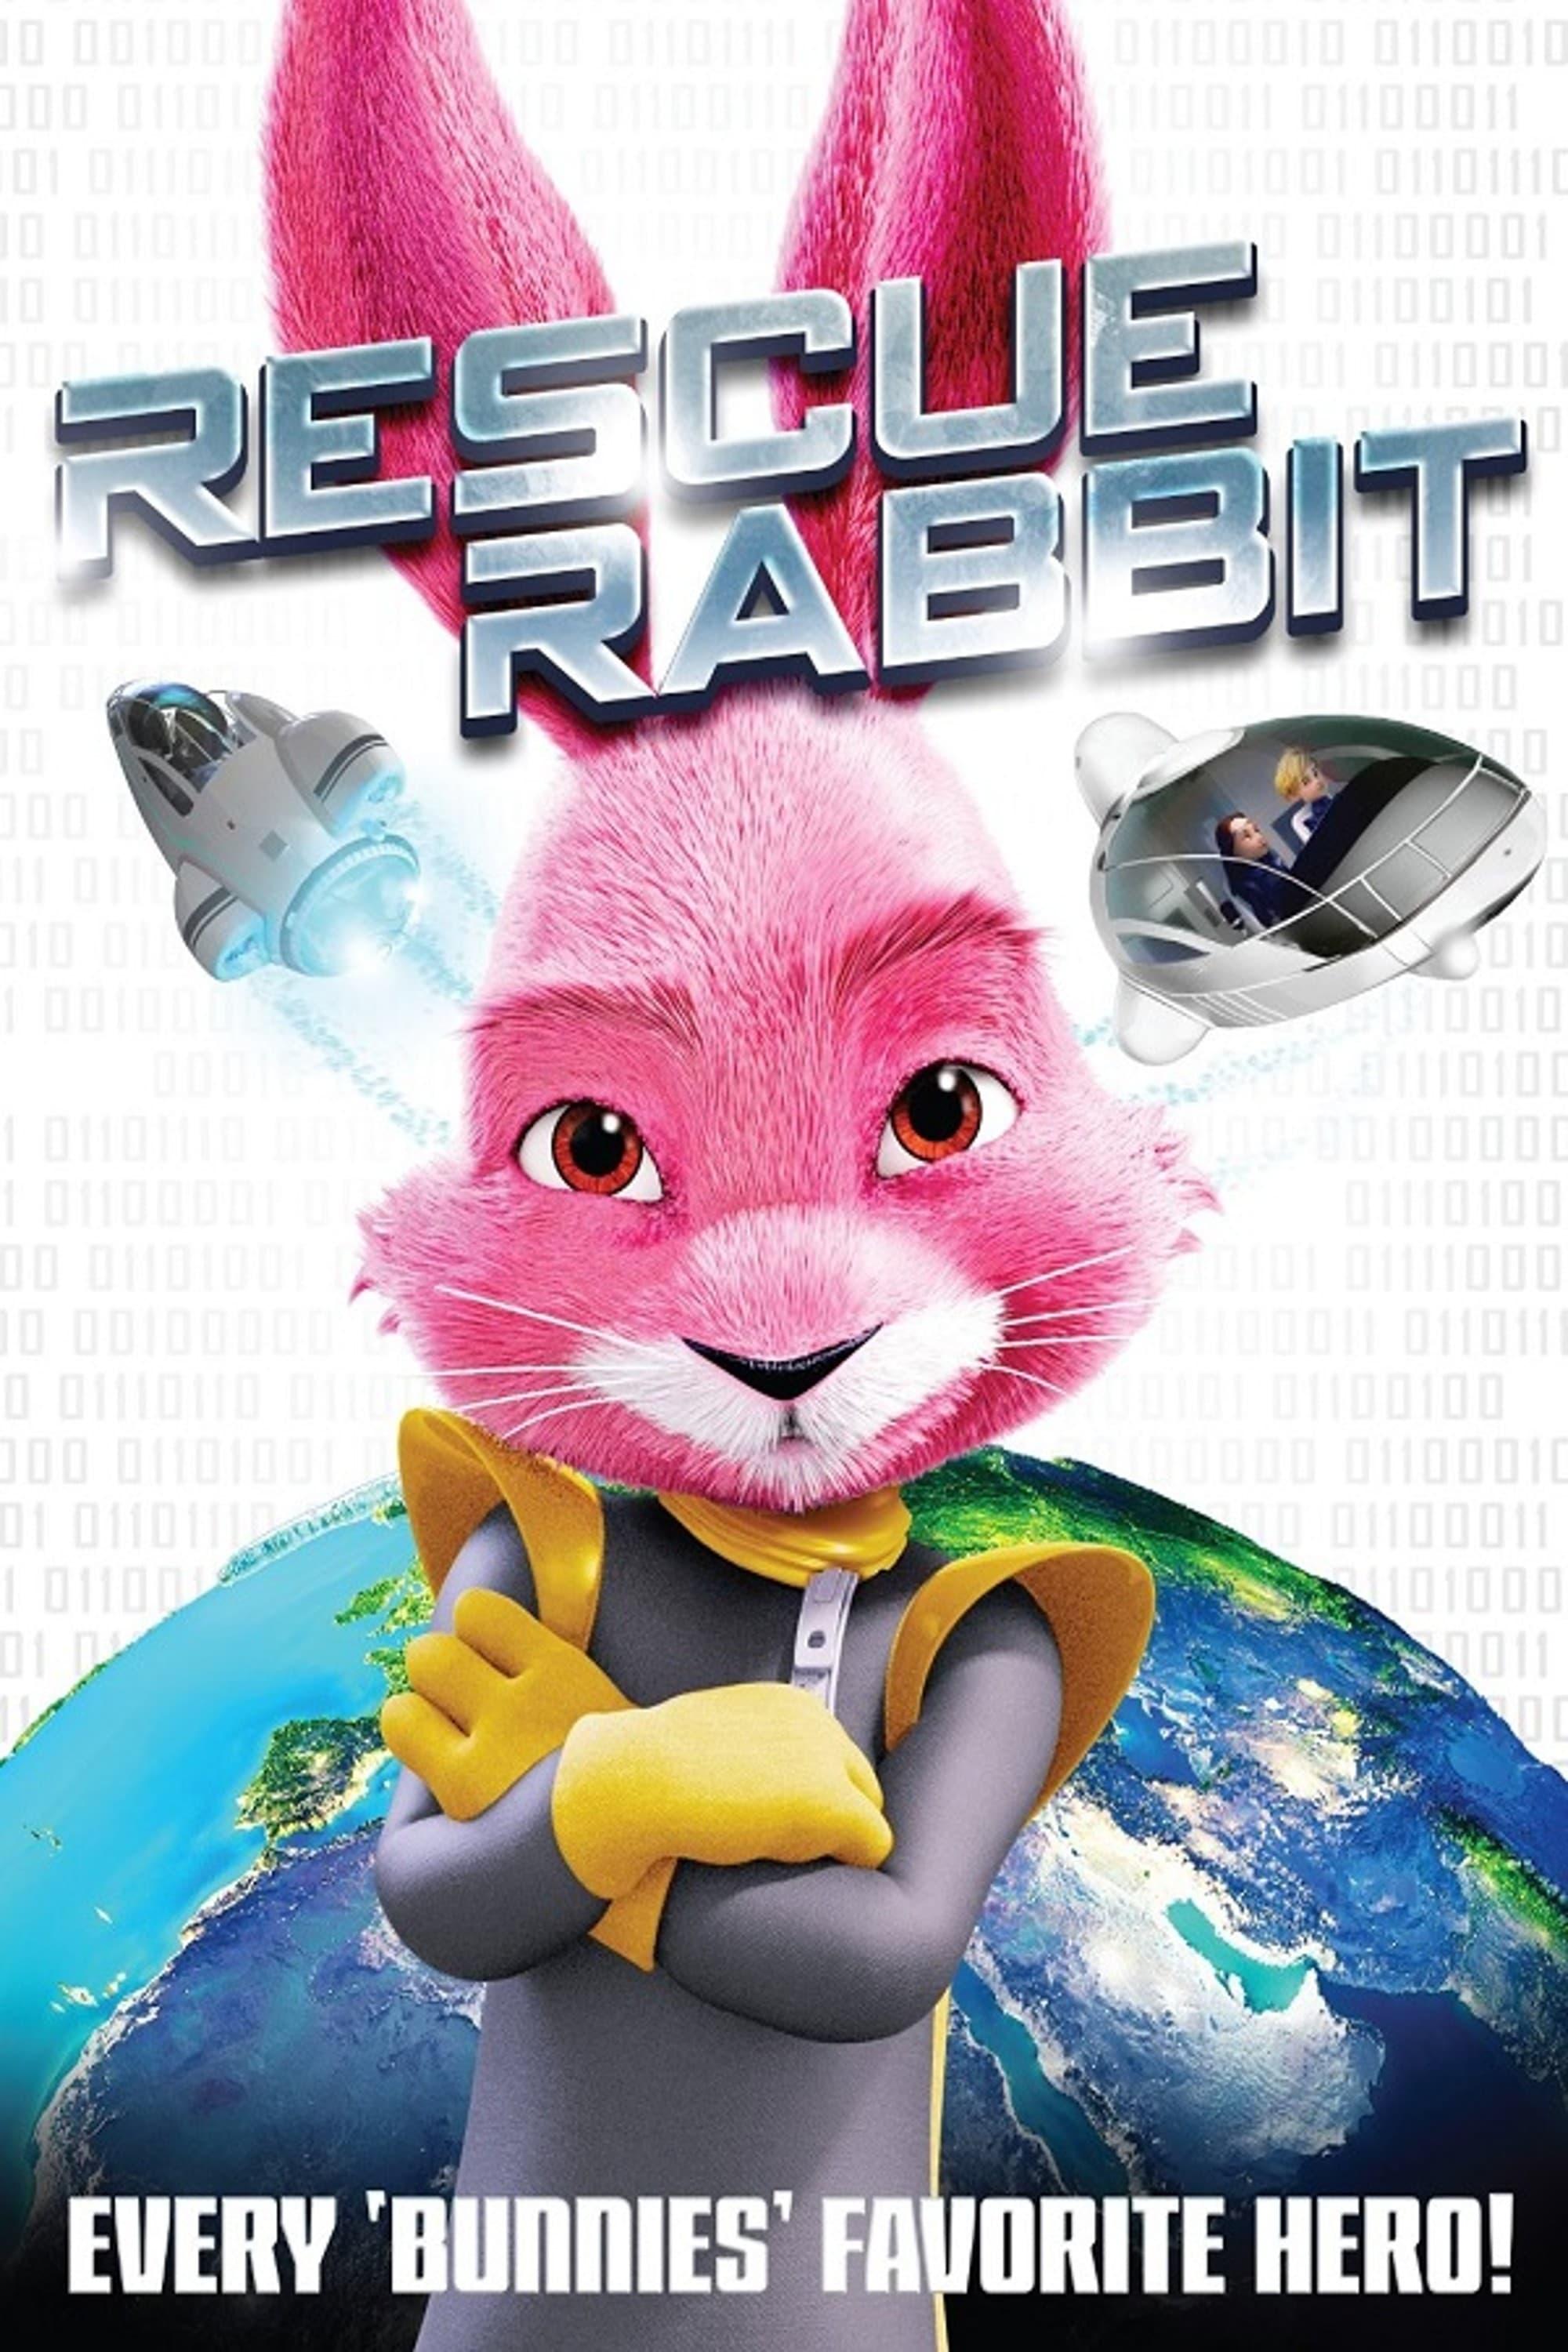 Rescue Rabbit poster